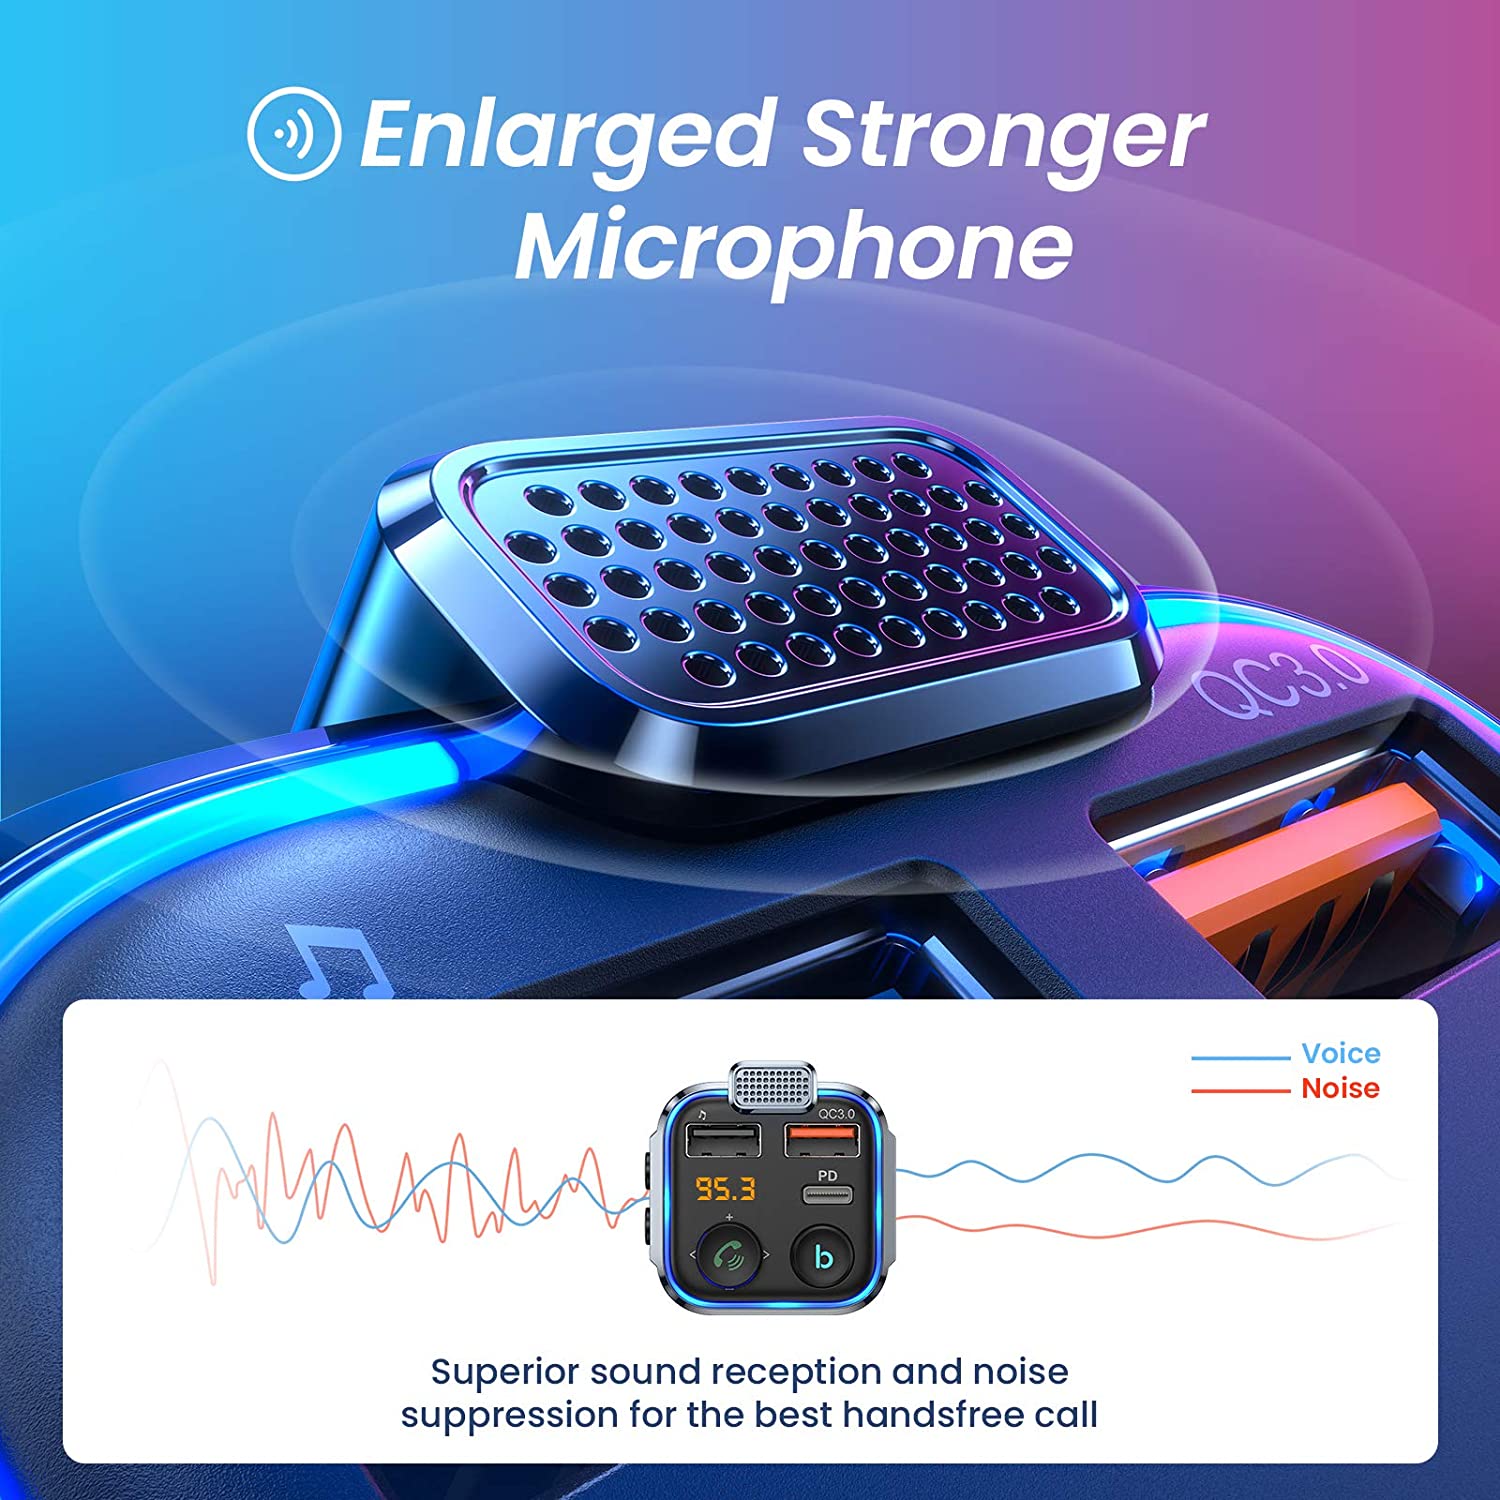 Transmisor Bluetooth FM ALS-A184 – Electro Import